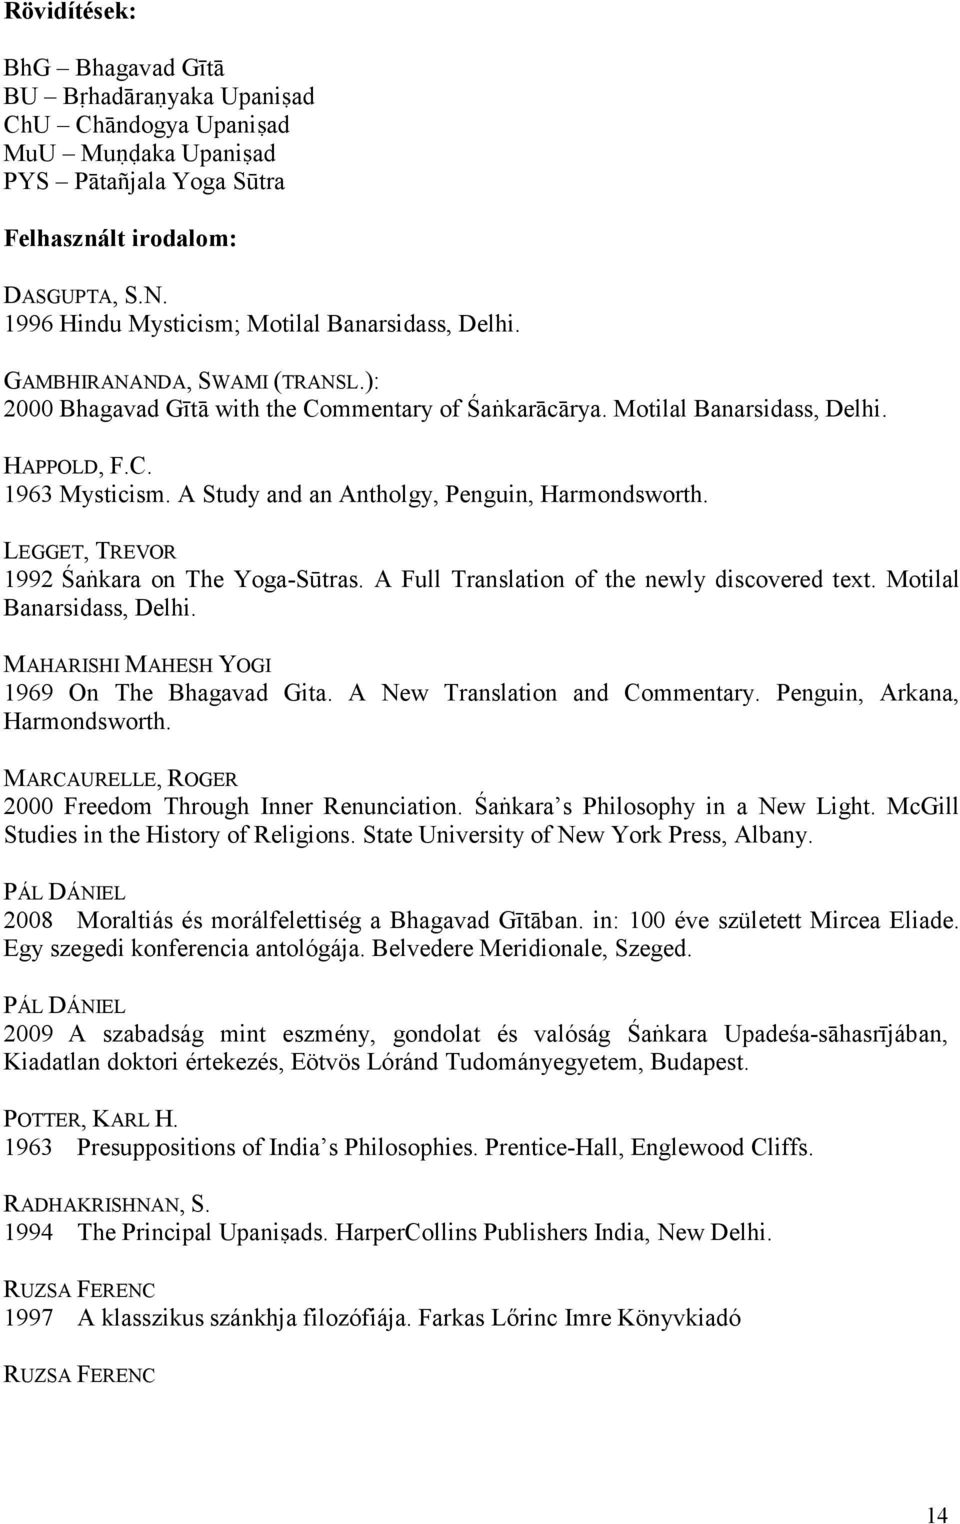 A Study and an Antholgy, Penguin, Harmondsworth. LEGGET, TREVOR 1992 Śa kara on The Yoga-Sūtras. A Full Translation of the newly discovered text. Motilal Banarsidass, Delhi.